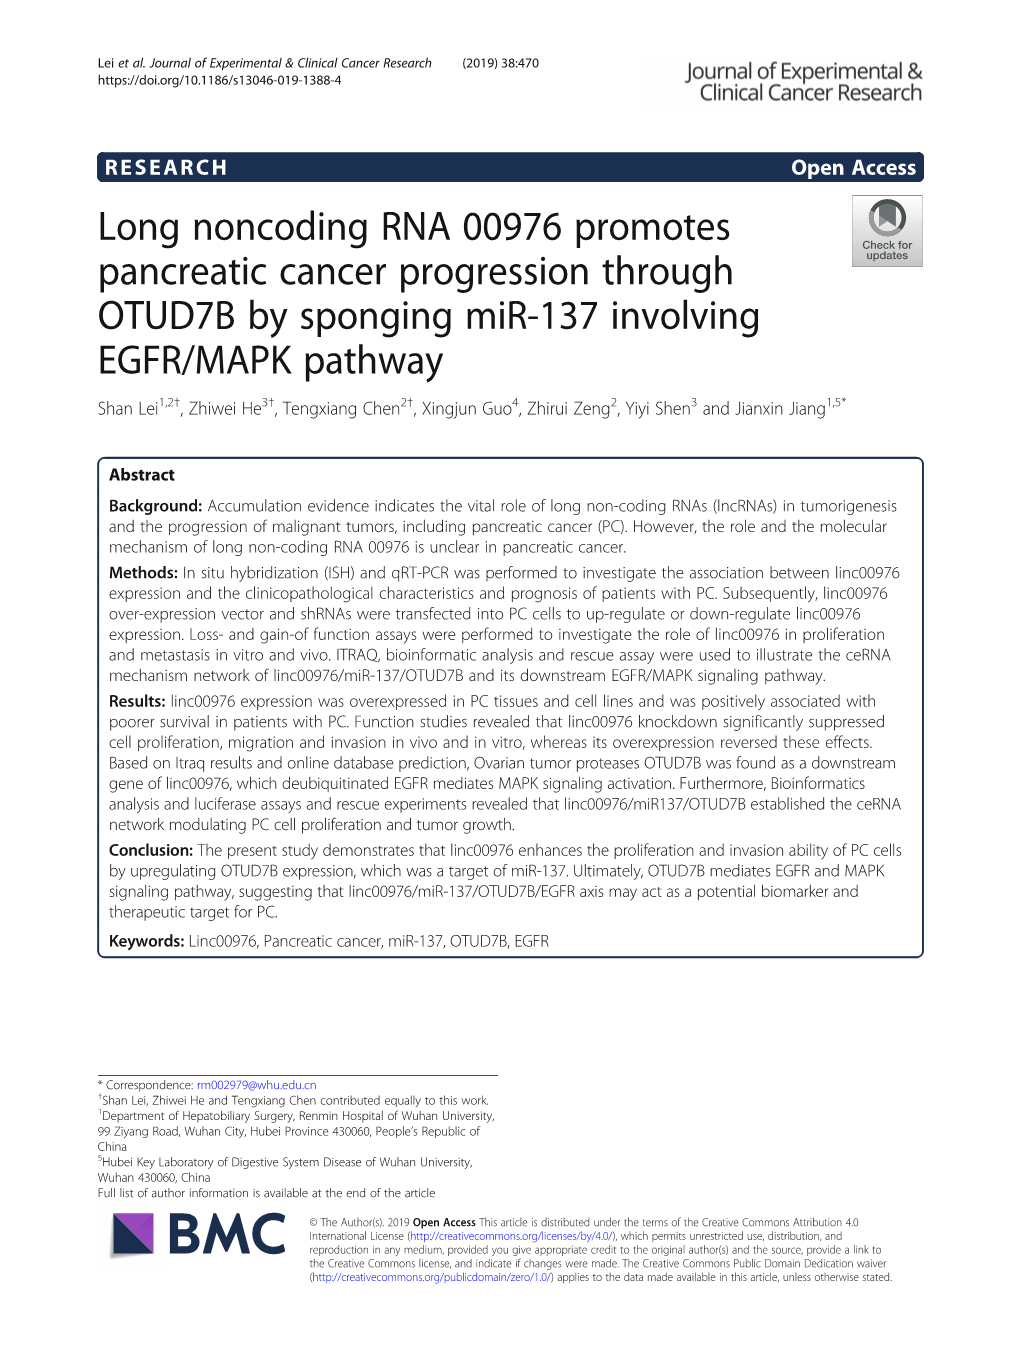 Long Noncoding RNA 00976 Promotes Pancreatic Cancer